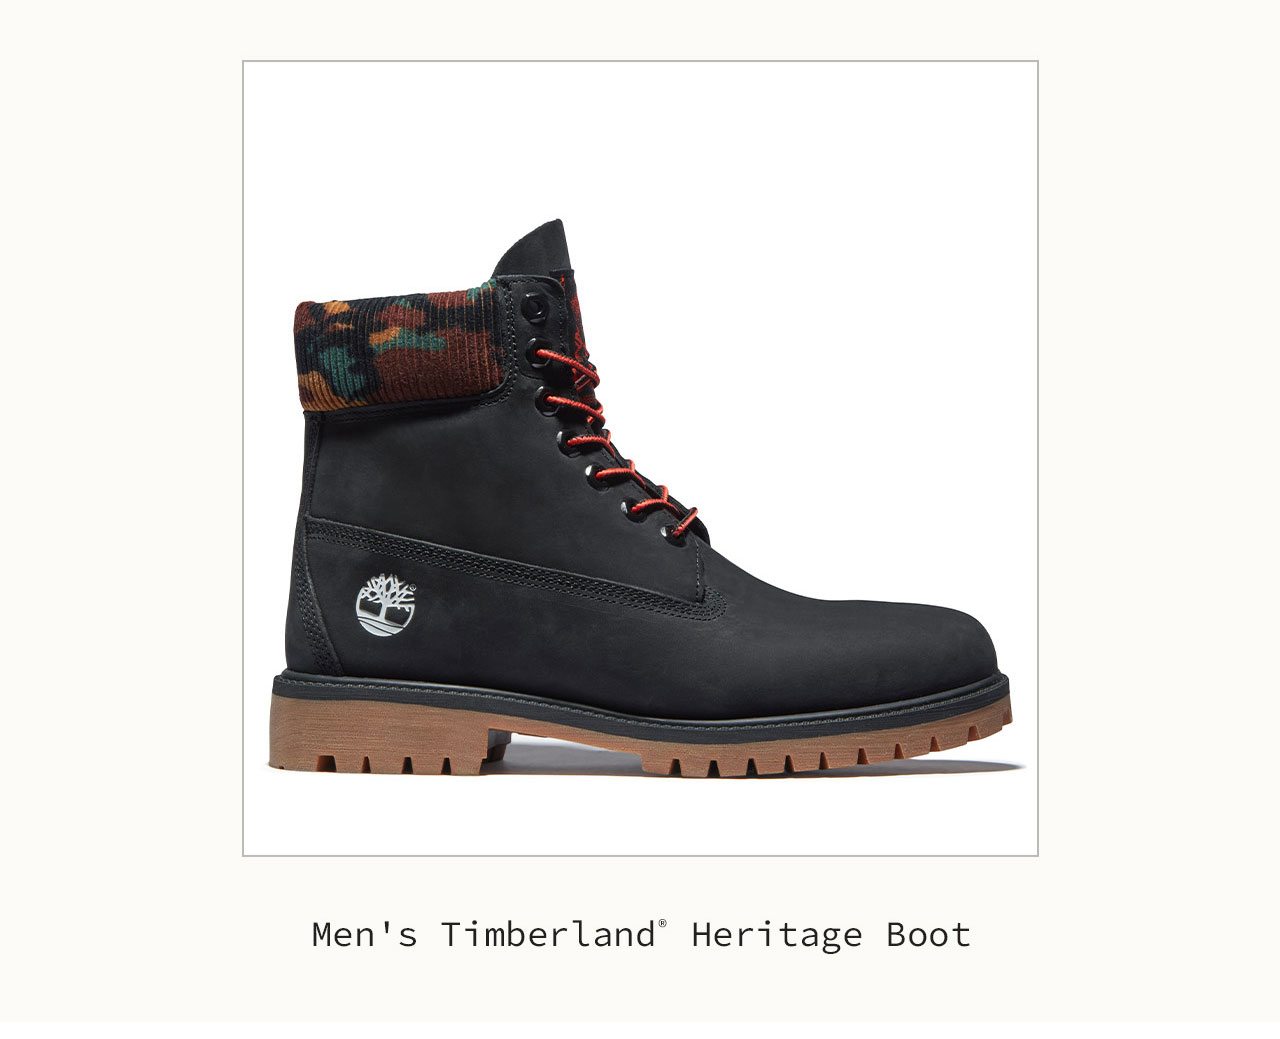 Men's Timberland Heritage Boot